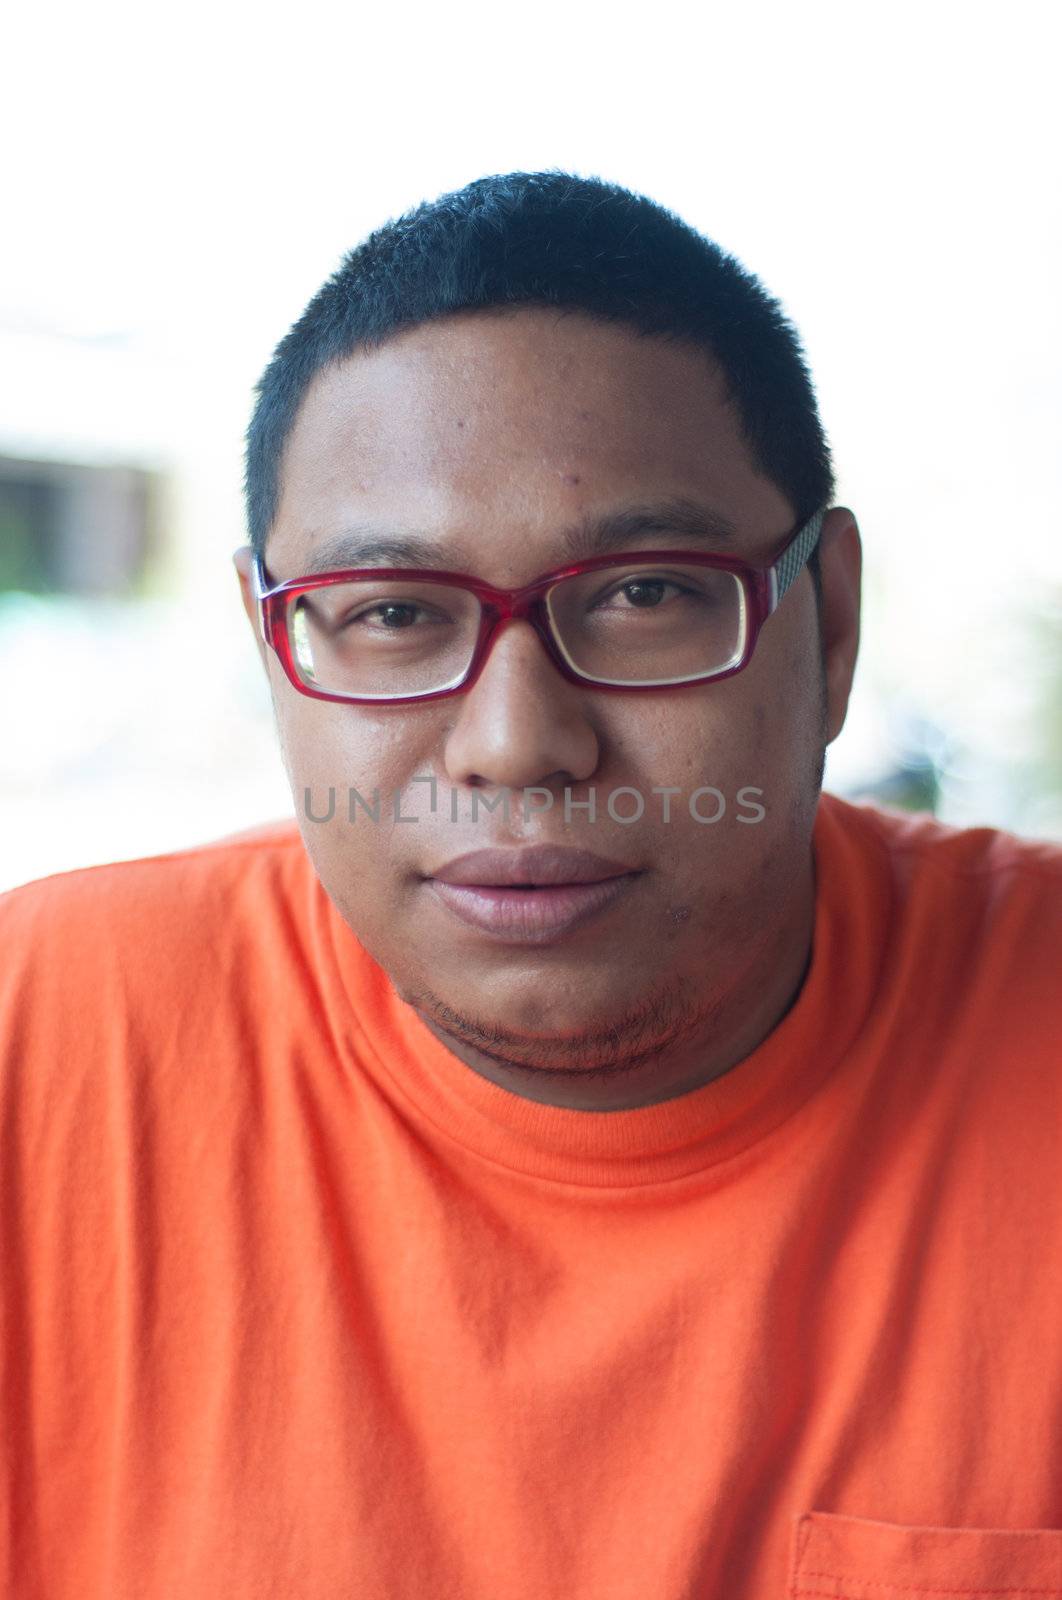 asian man wearing glasses portrait in orange shirt